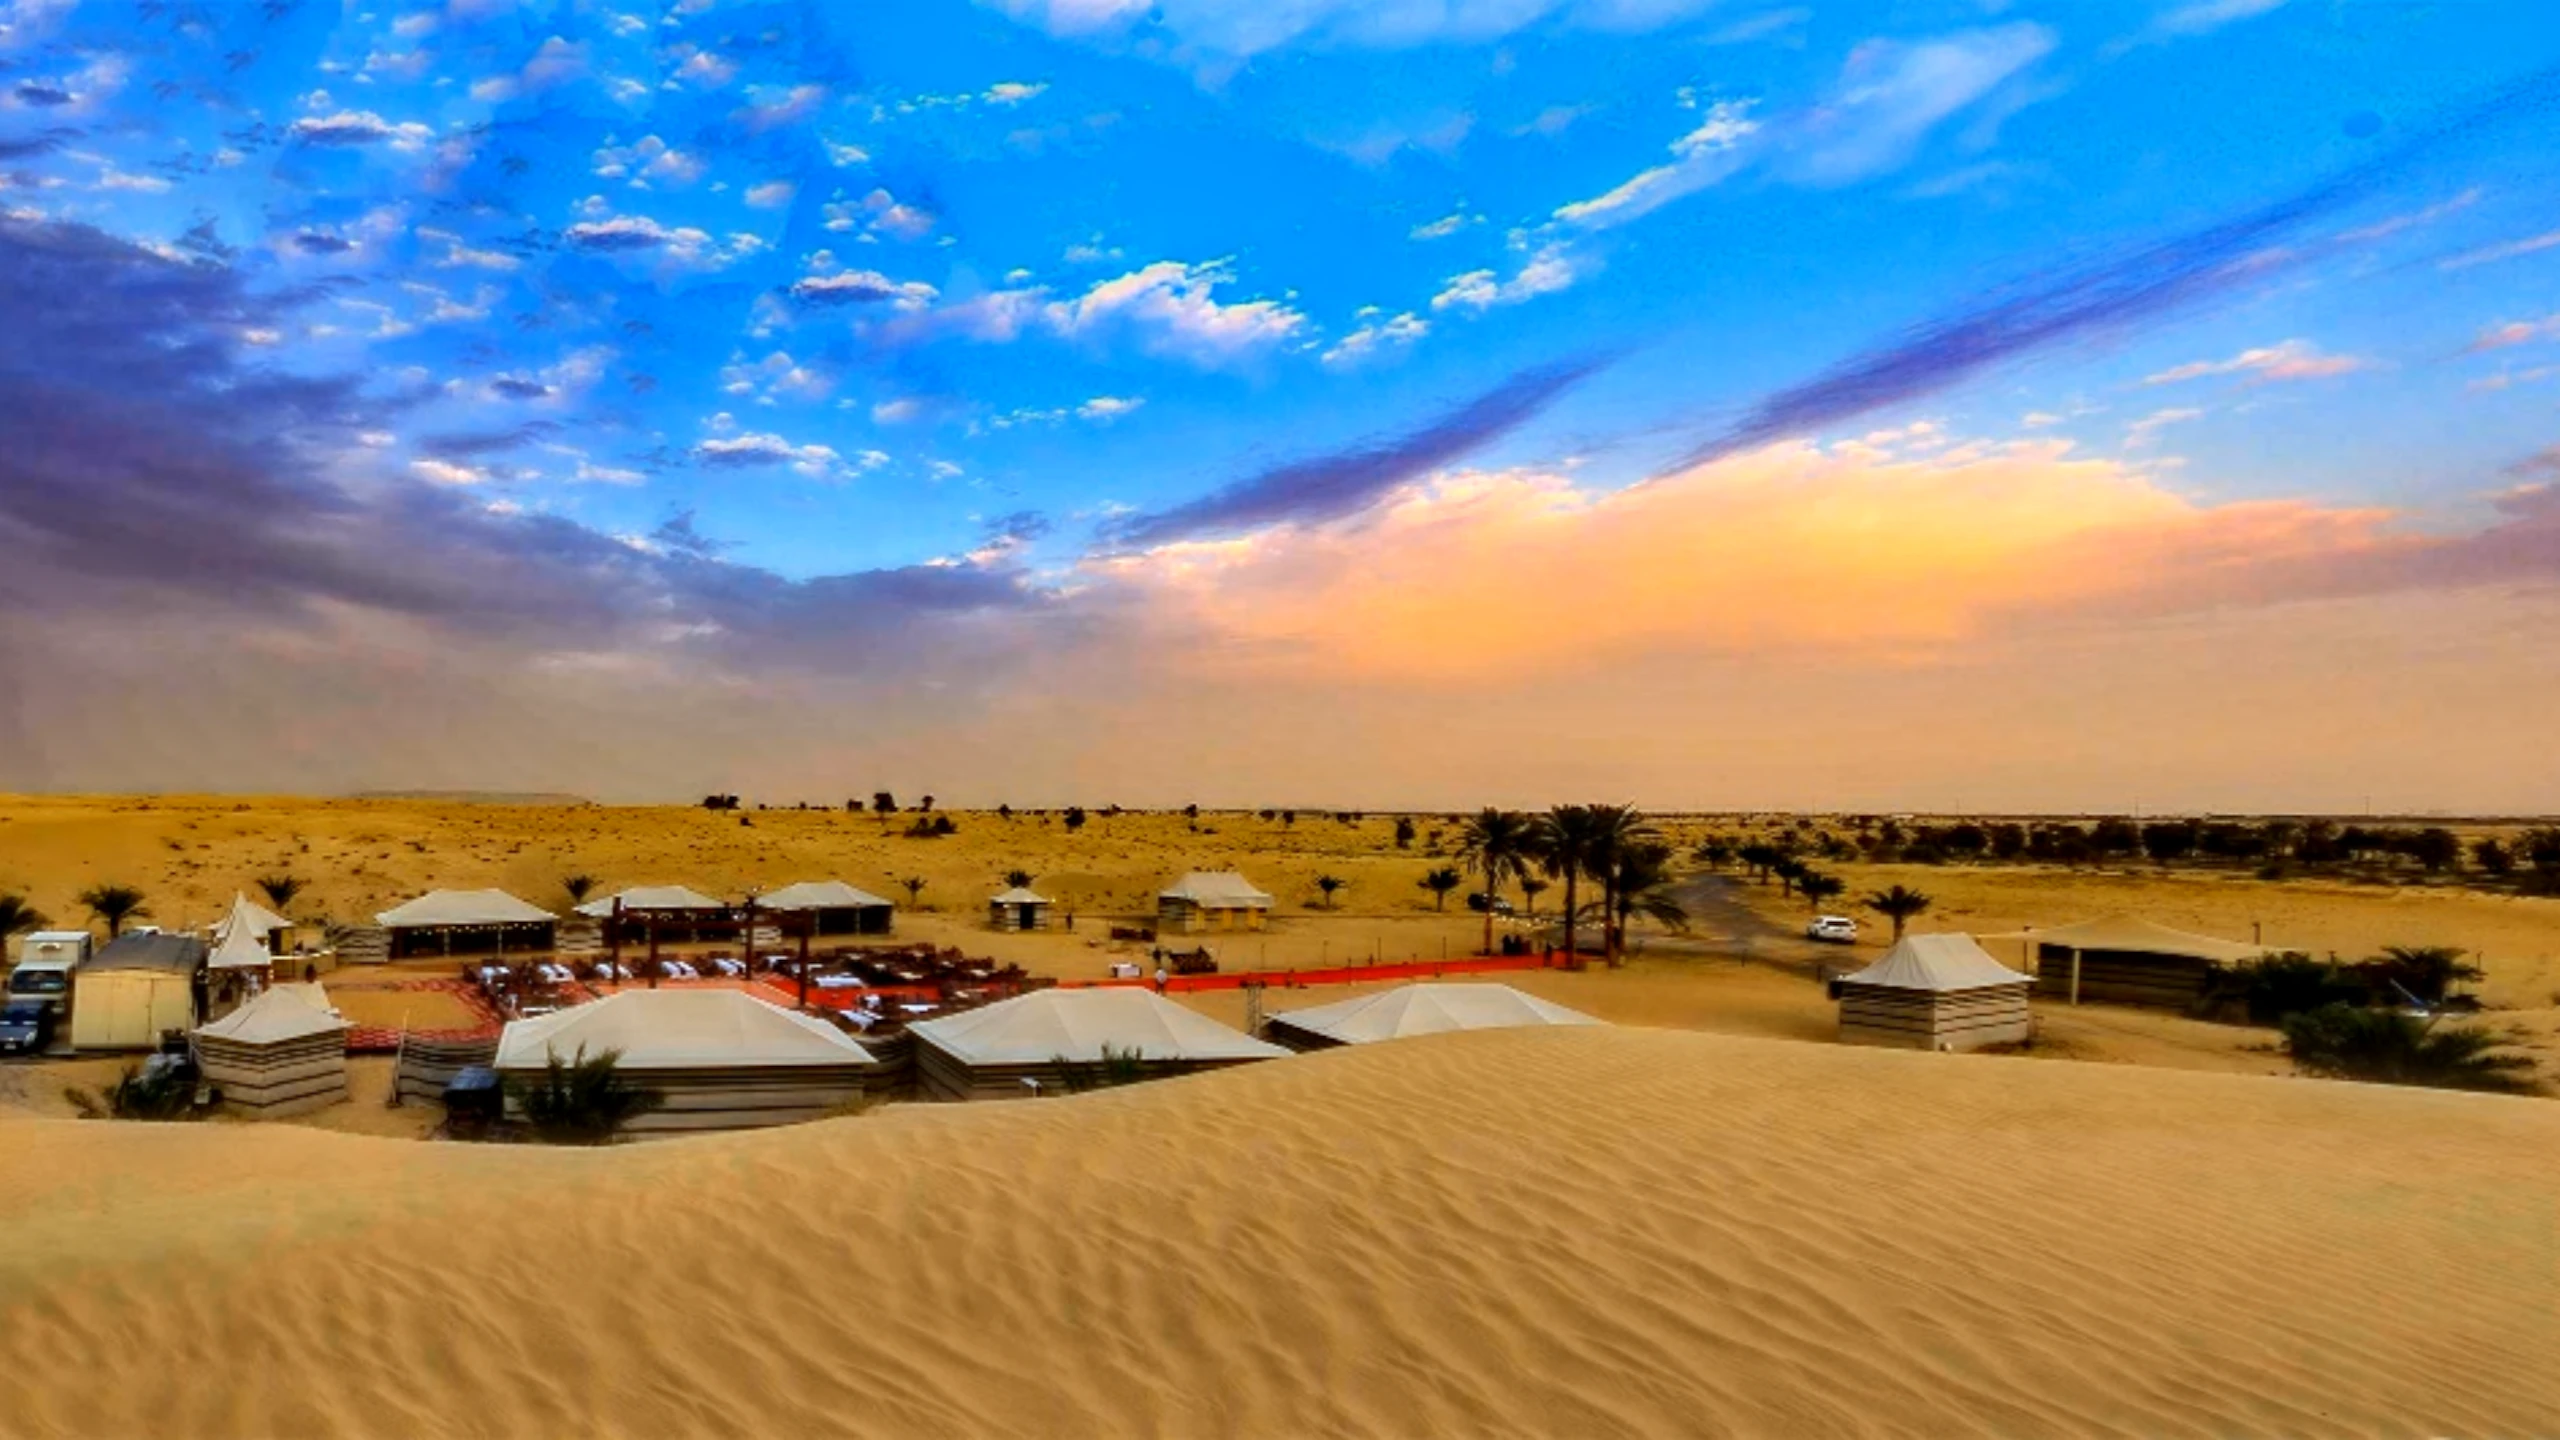 Caravanserai Bedouin Desert Dinner Experience Thrillark